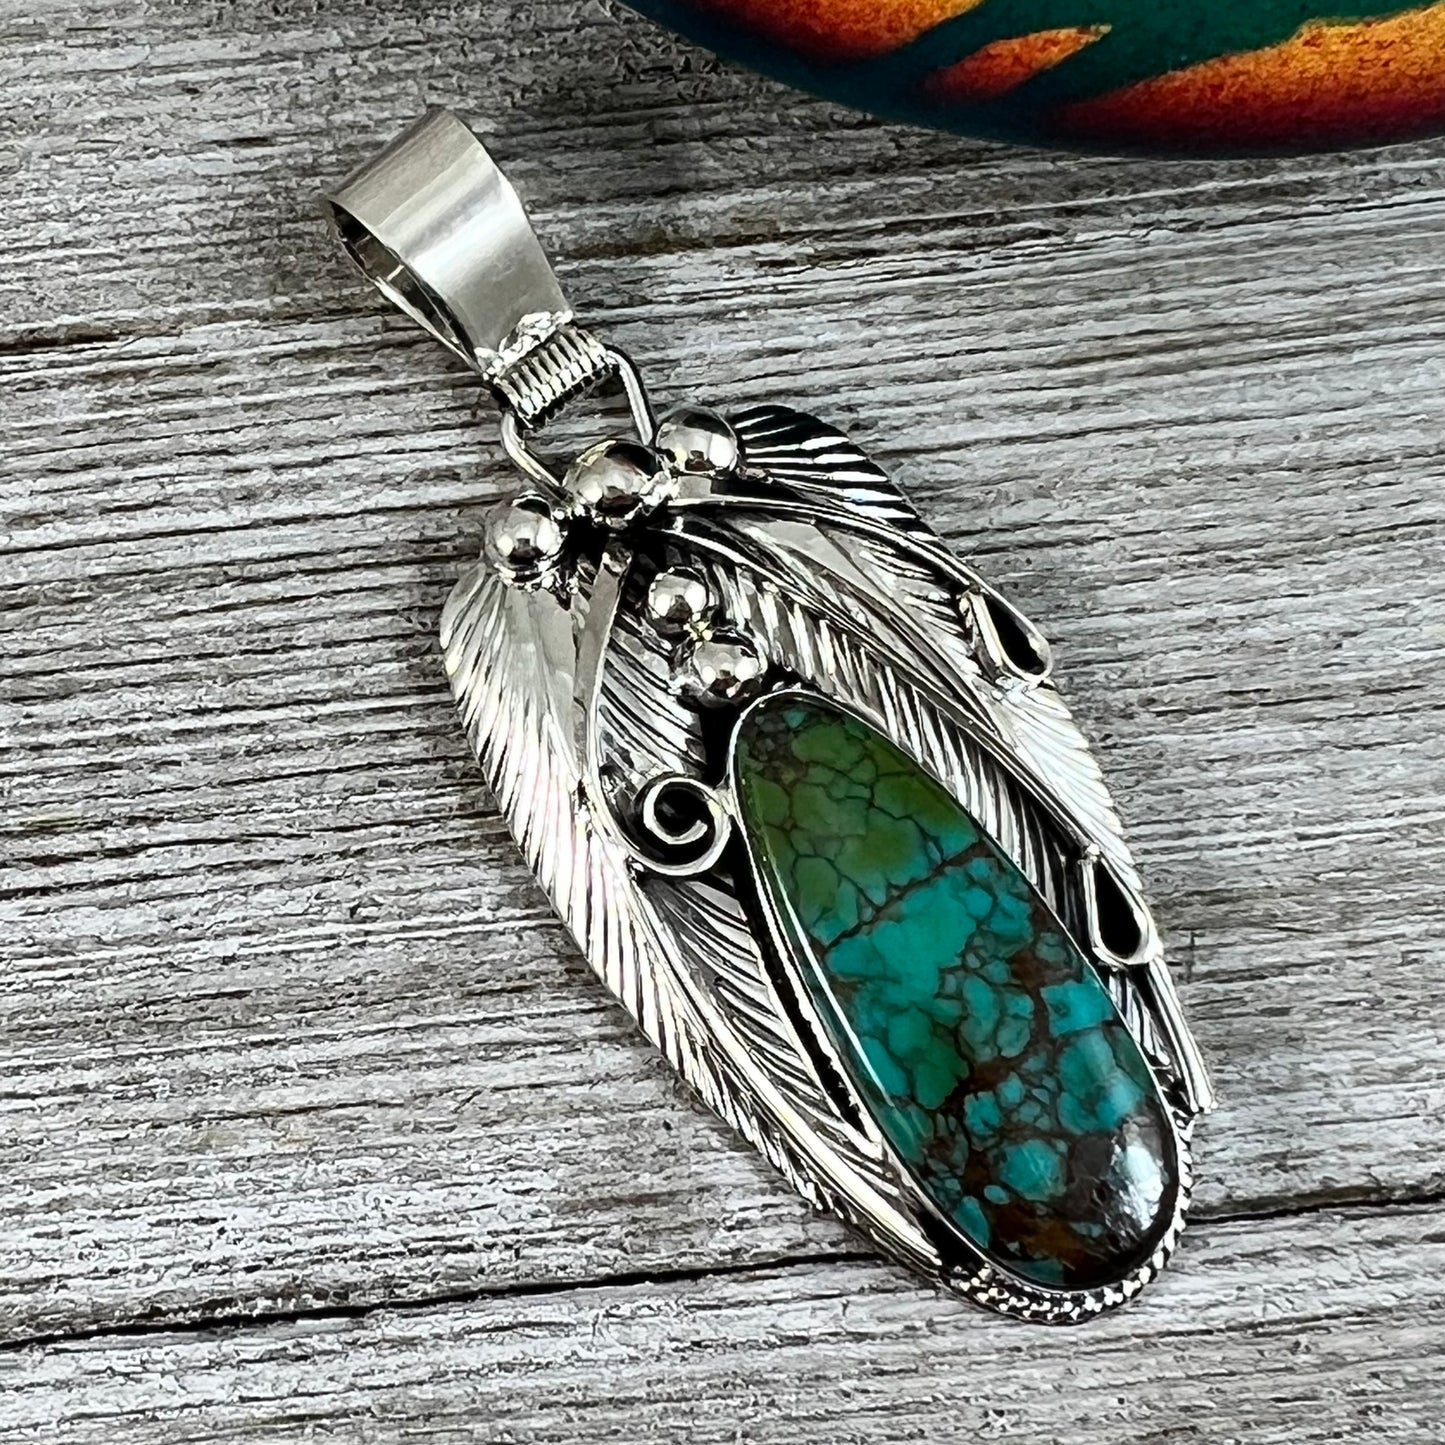 Green Kingman spiderweb polychrome turquoise with matrix pendant #5 Navajo handmade Davey Morgan, sterling silver